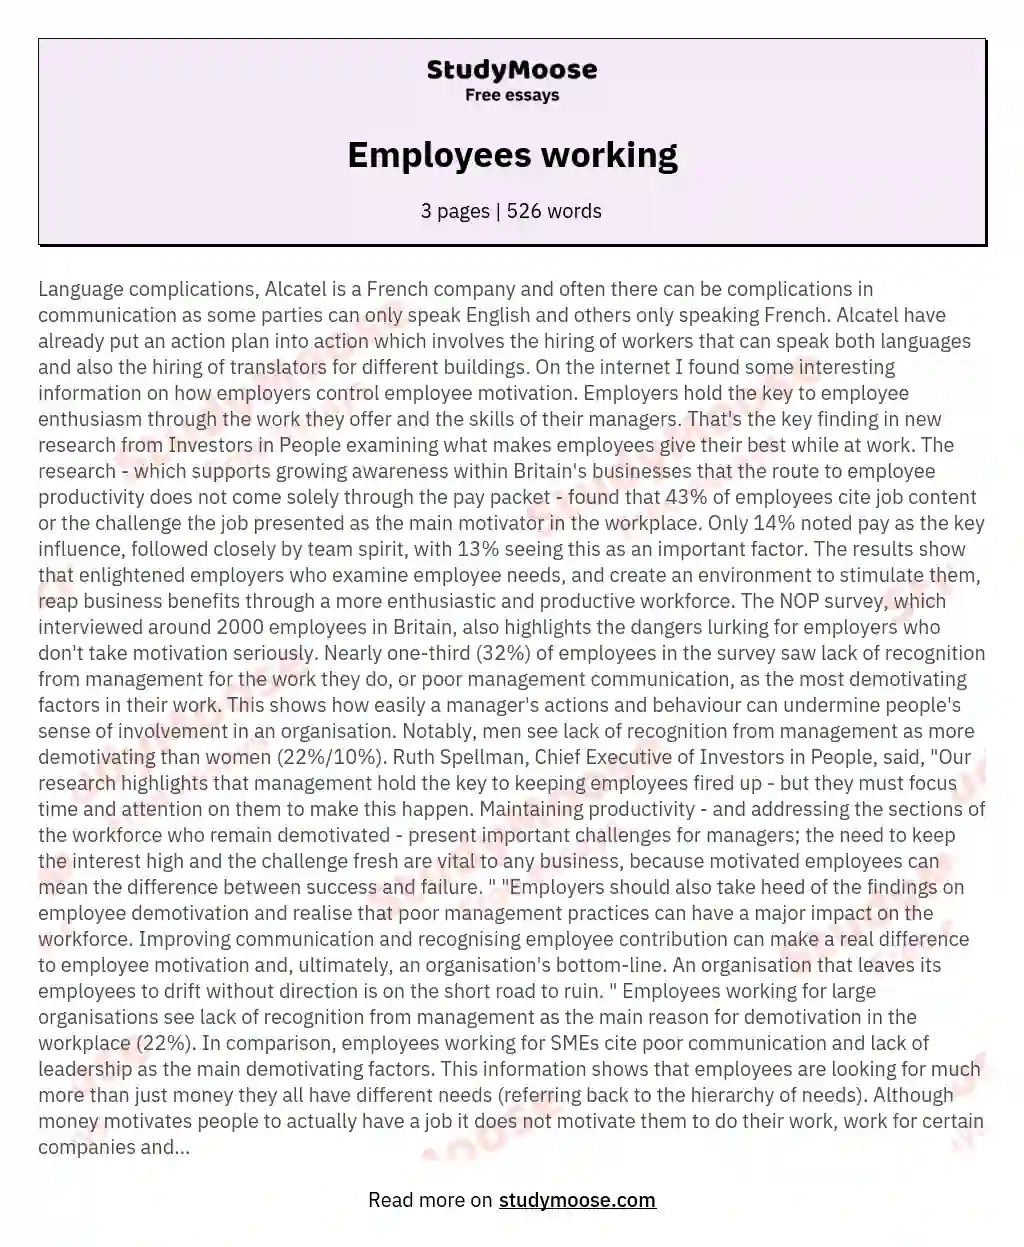 Employees working essay